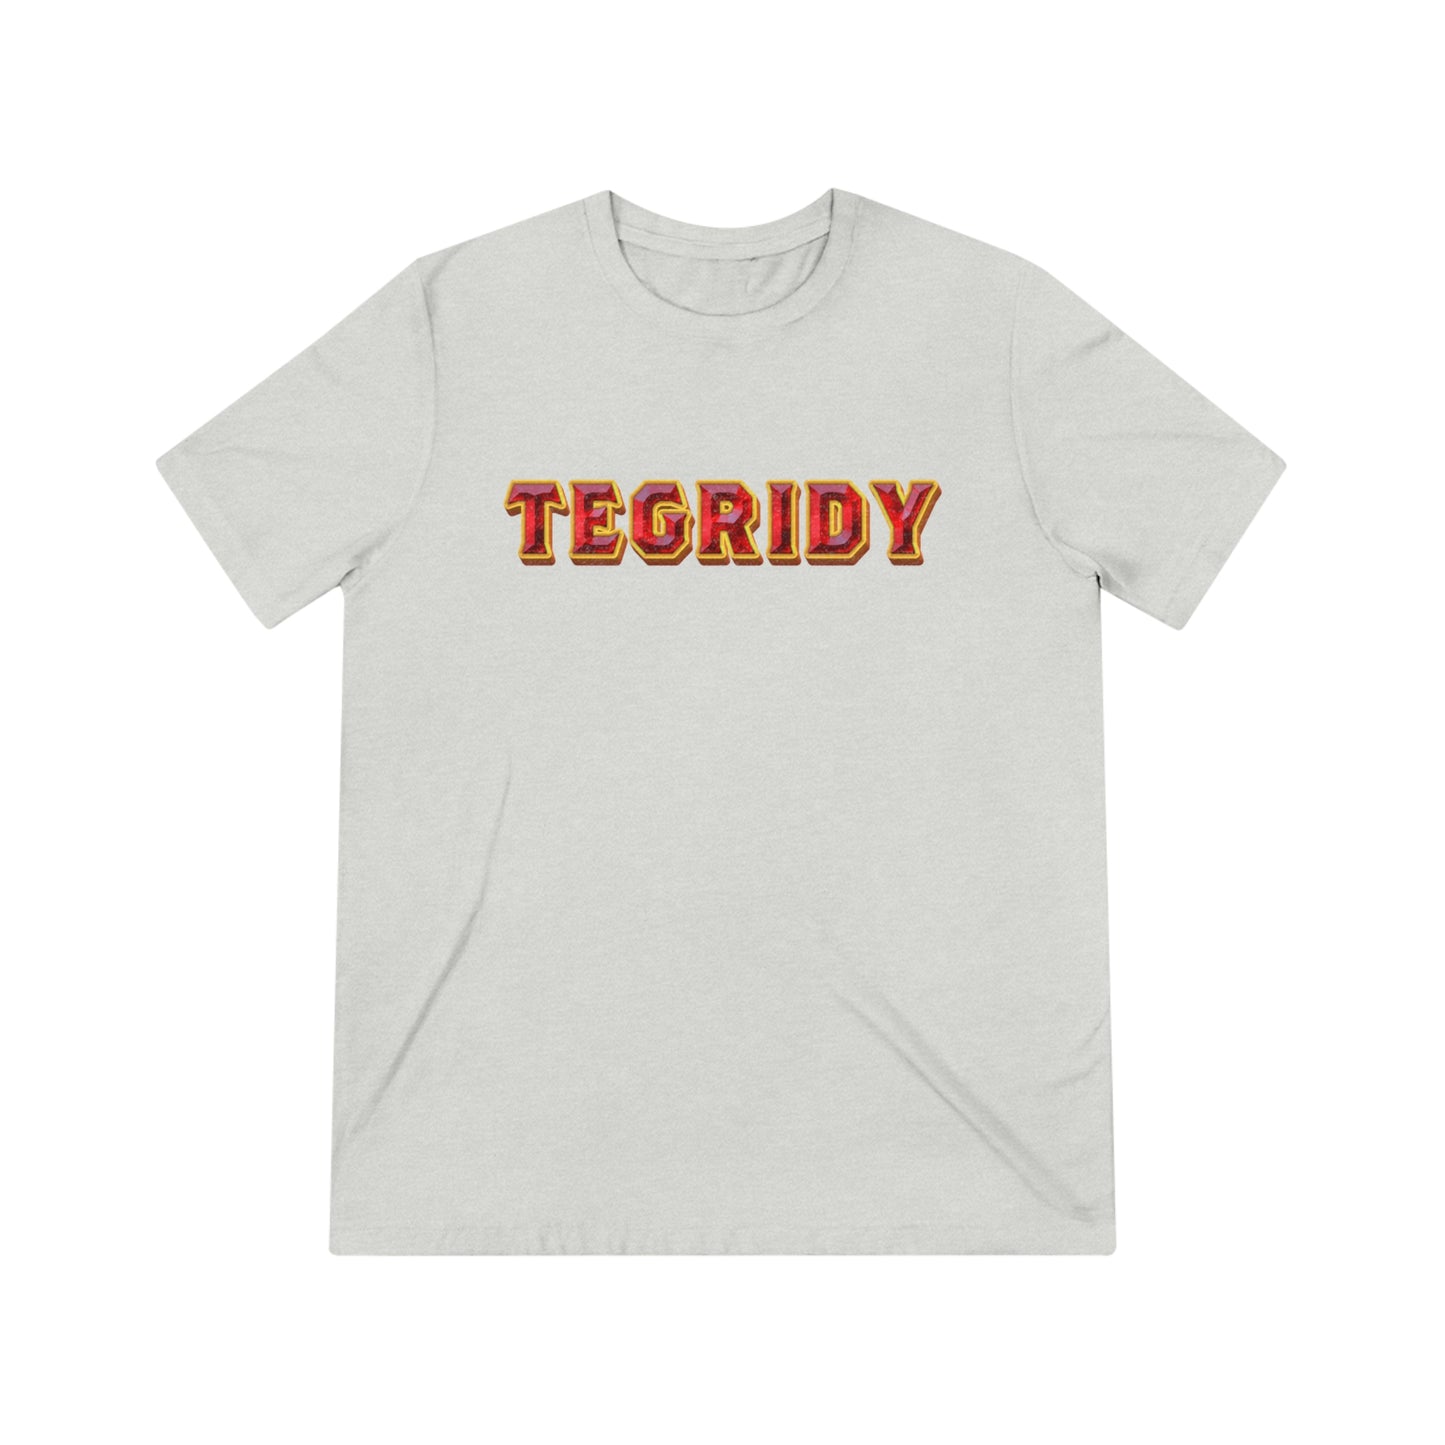 Tegridy - T-Shirt